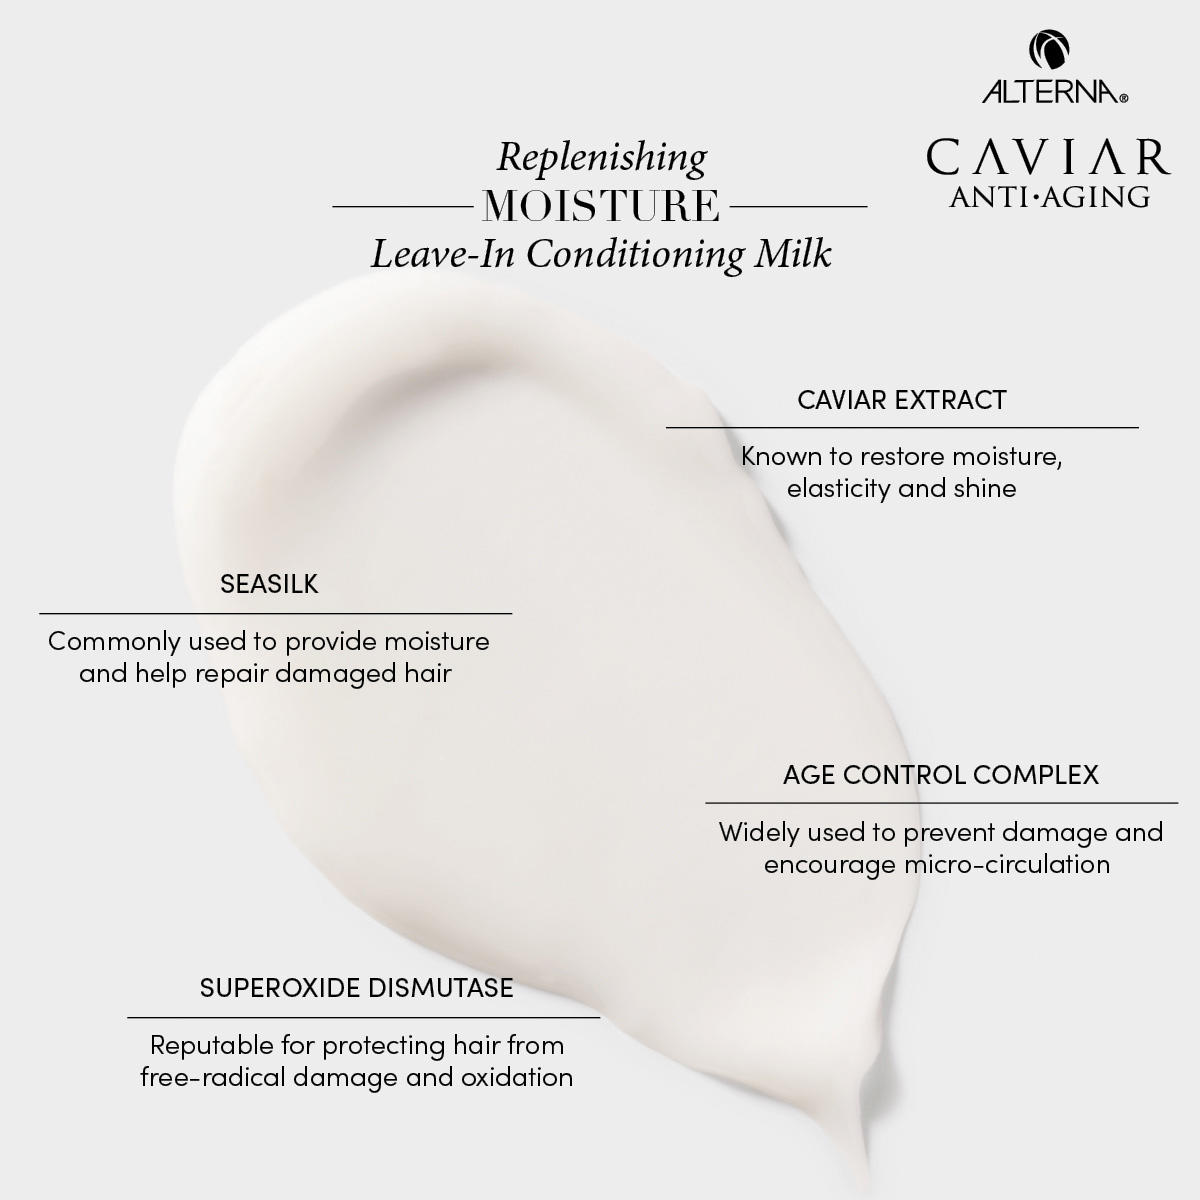 Alterna Caviar Anti-Aging Replenishing Moisture Leave-In-Conditioning Milk 147 ml - 4